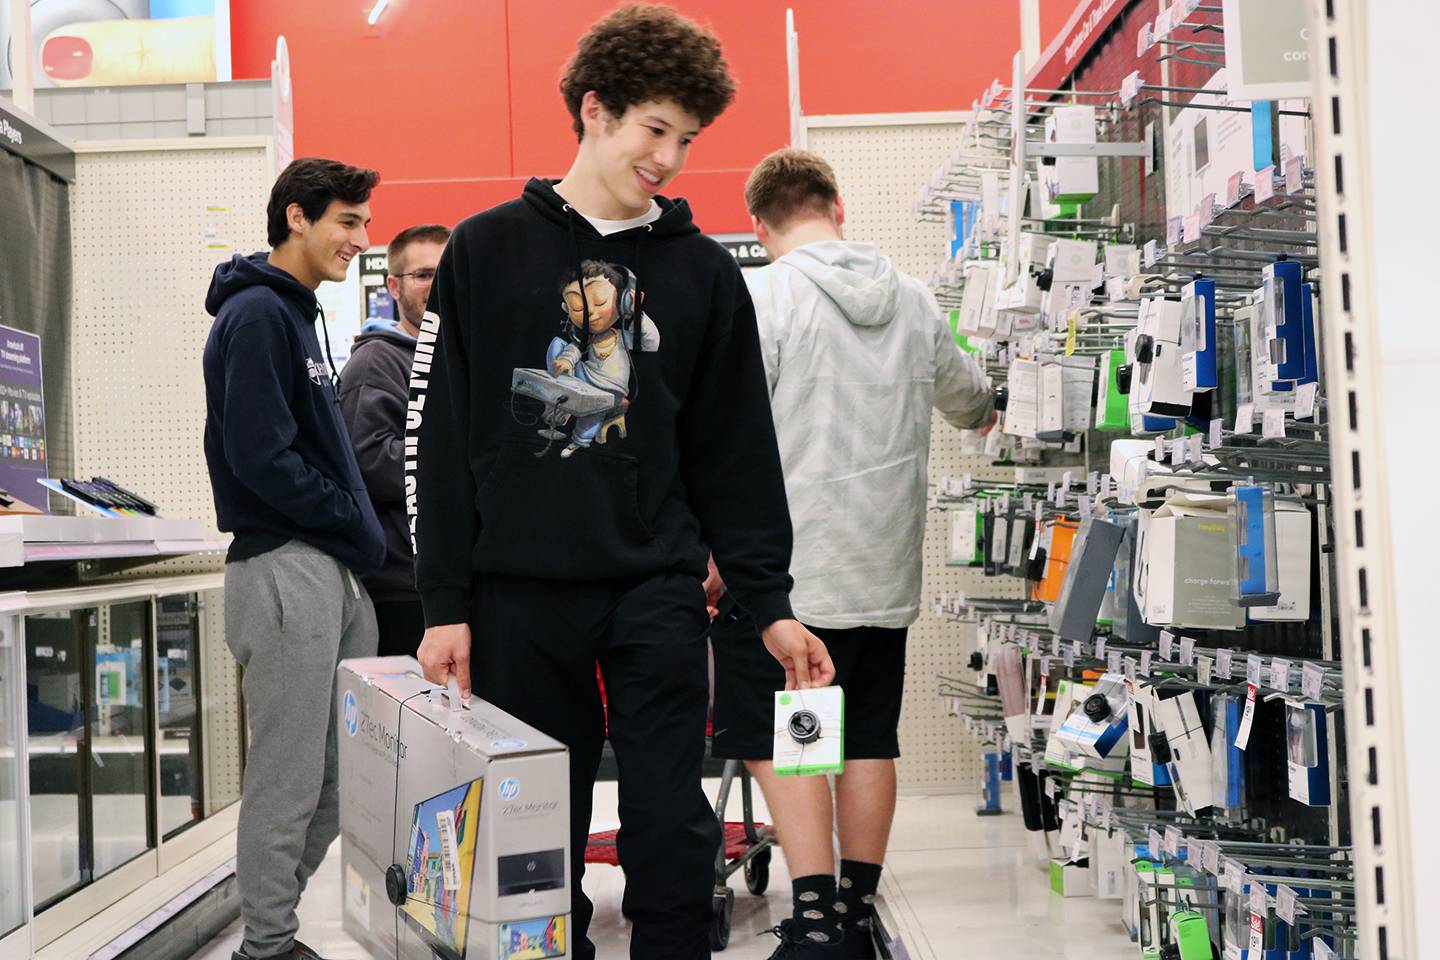 Students shop at the Towson Target